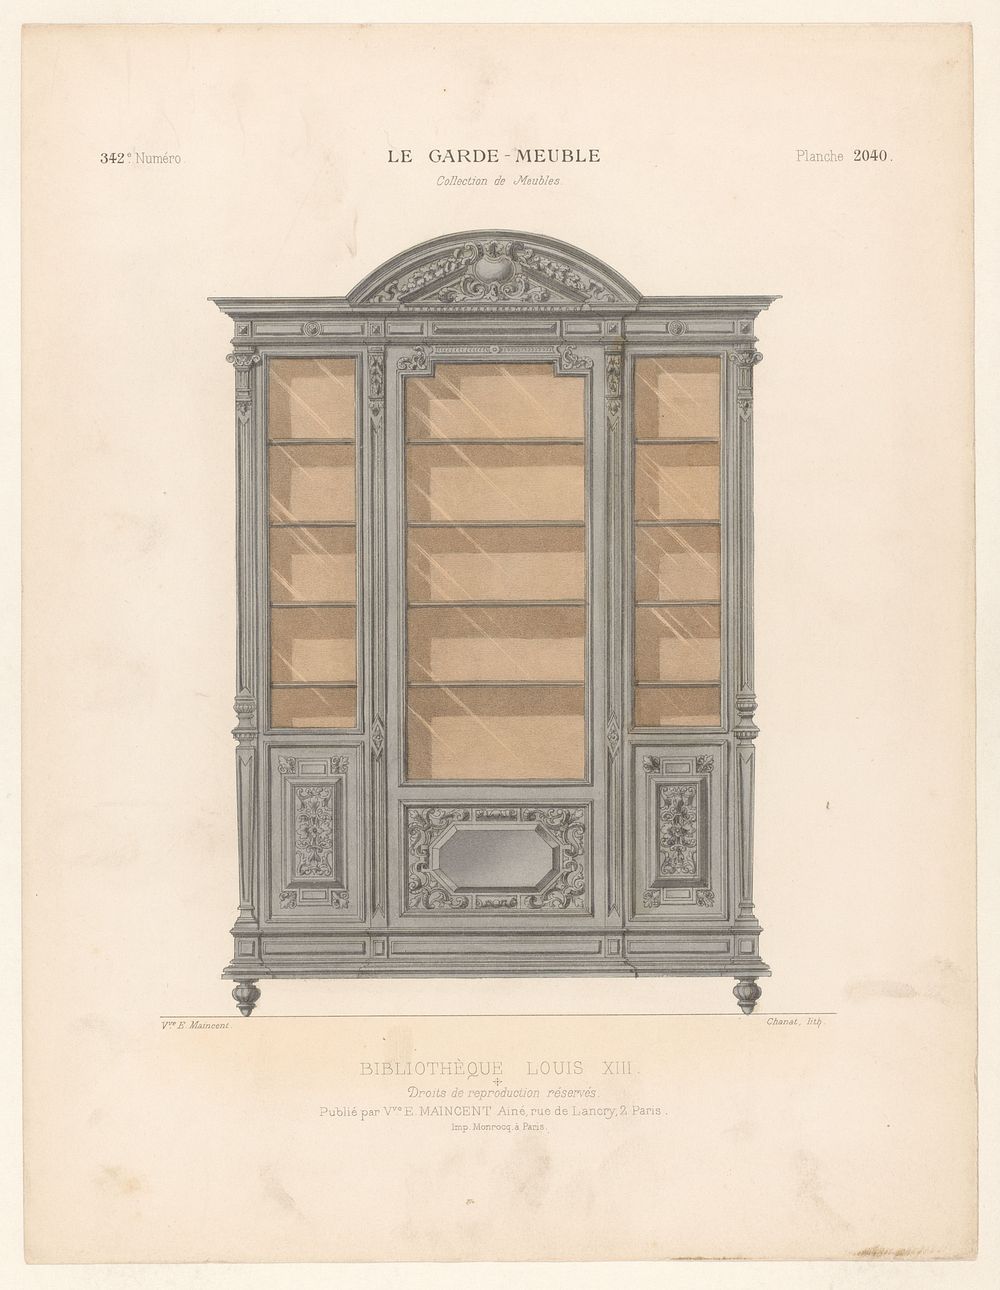 Boekenkast in de Lodewijk XIII-stijl (c. 1885 - c. 1895) by Chanat, Eugène Maincent, Monrocq and Eugène Maincent